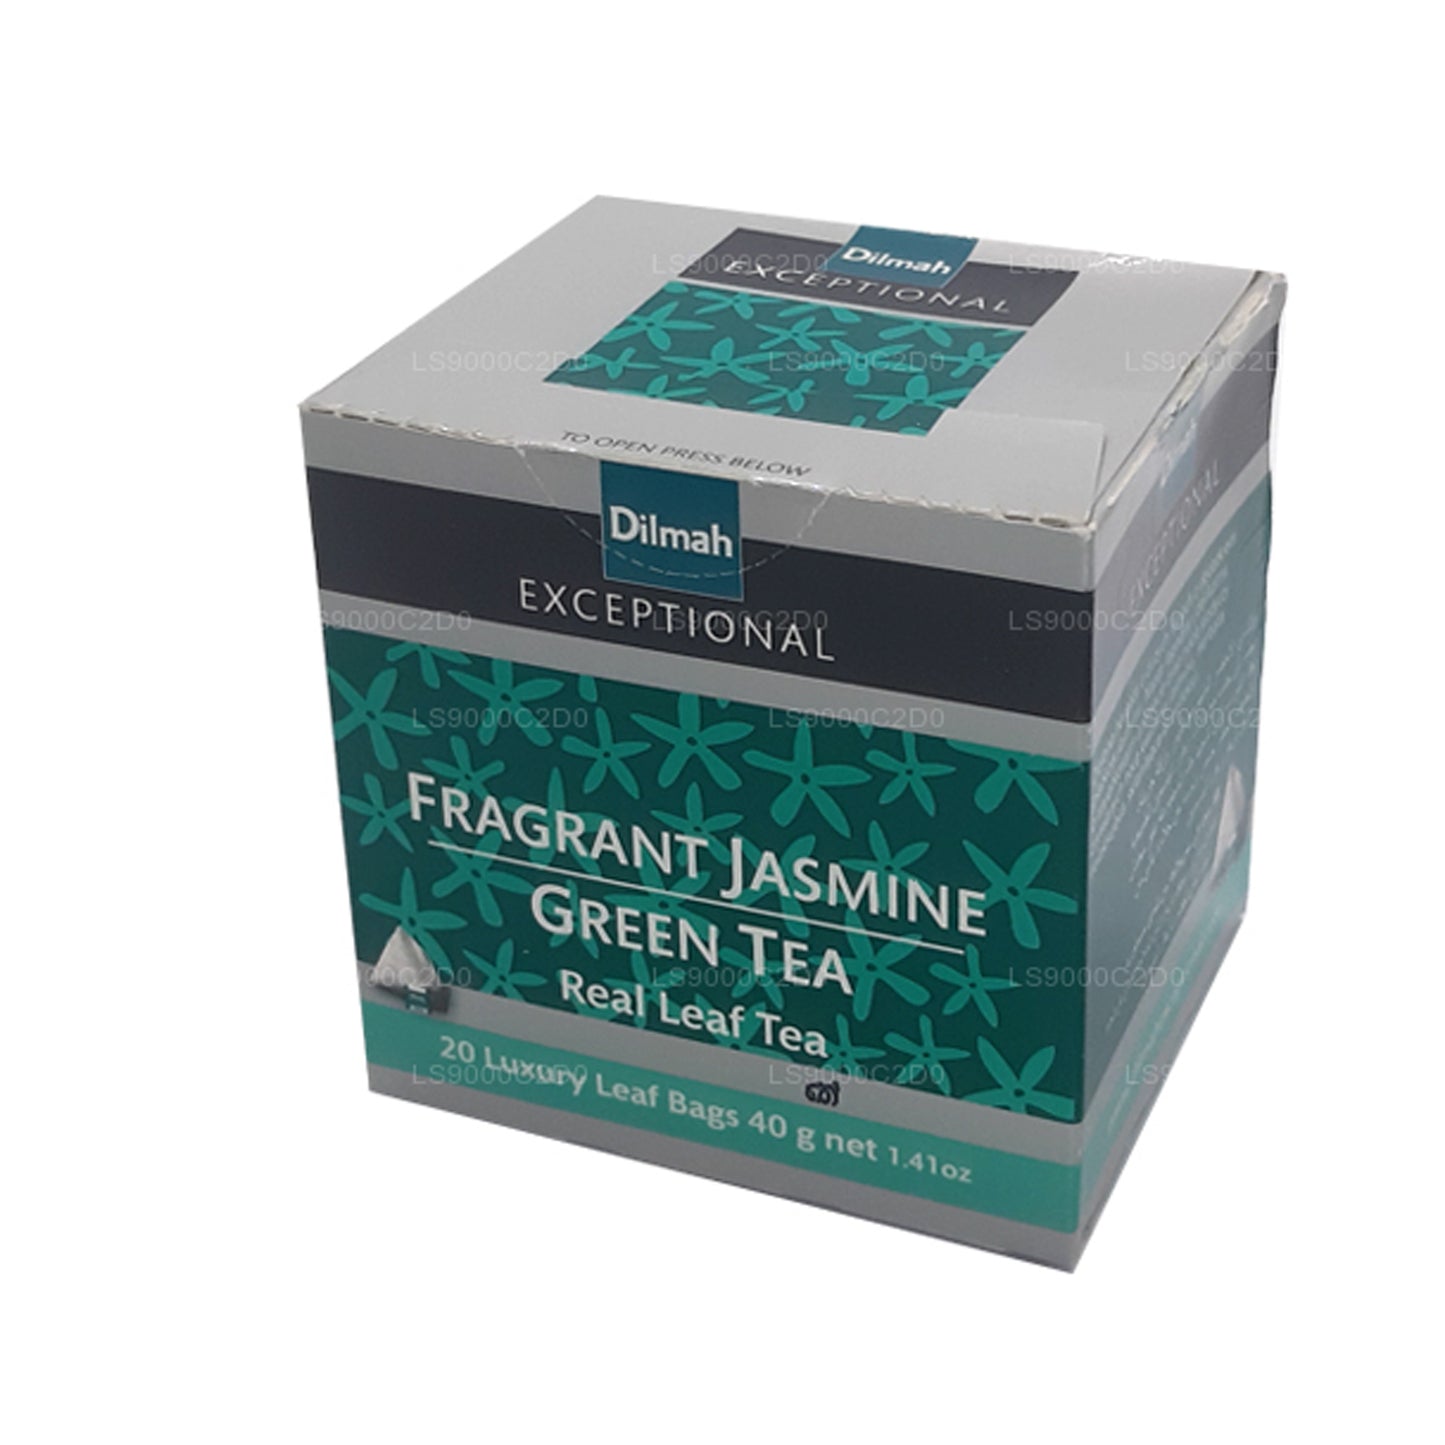 Dilmah Exceptional Fragrant Jasmine Green Tea (40g) 20 Tea Bags